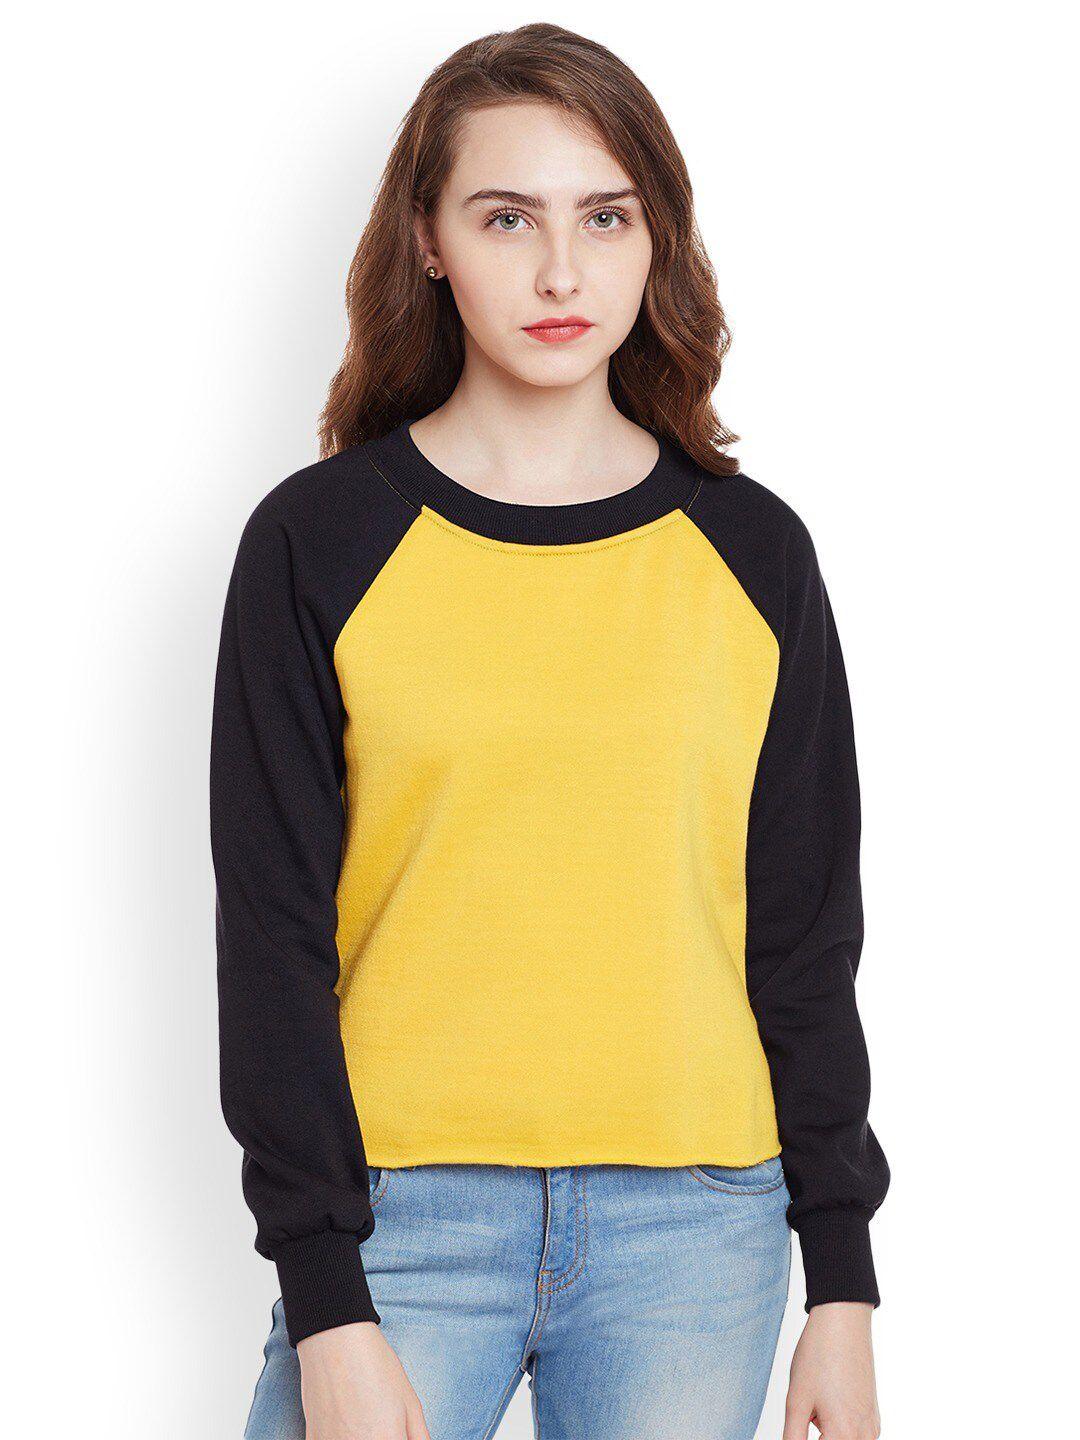 baesd women yellow sweatshirt